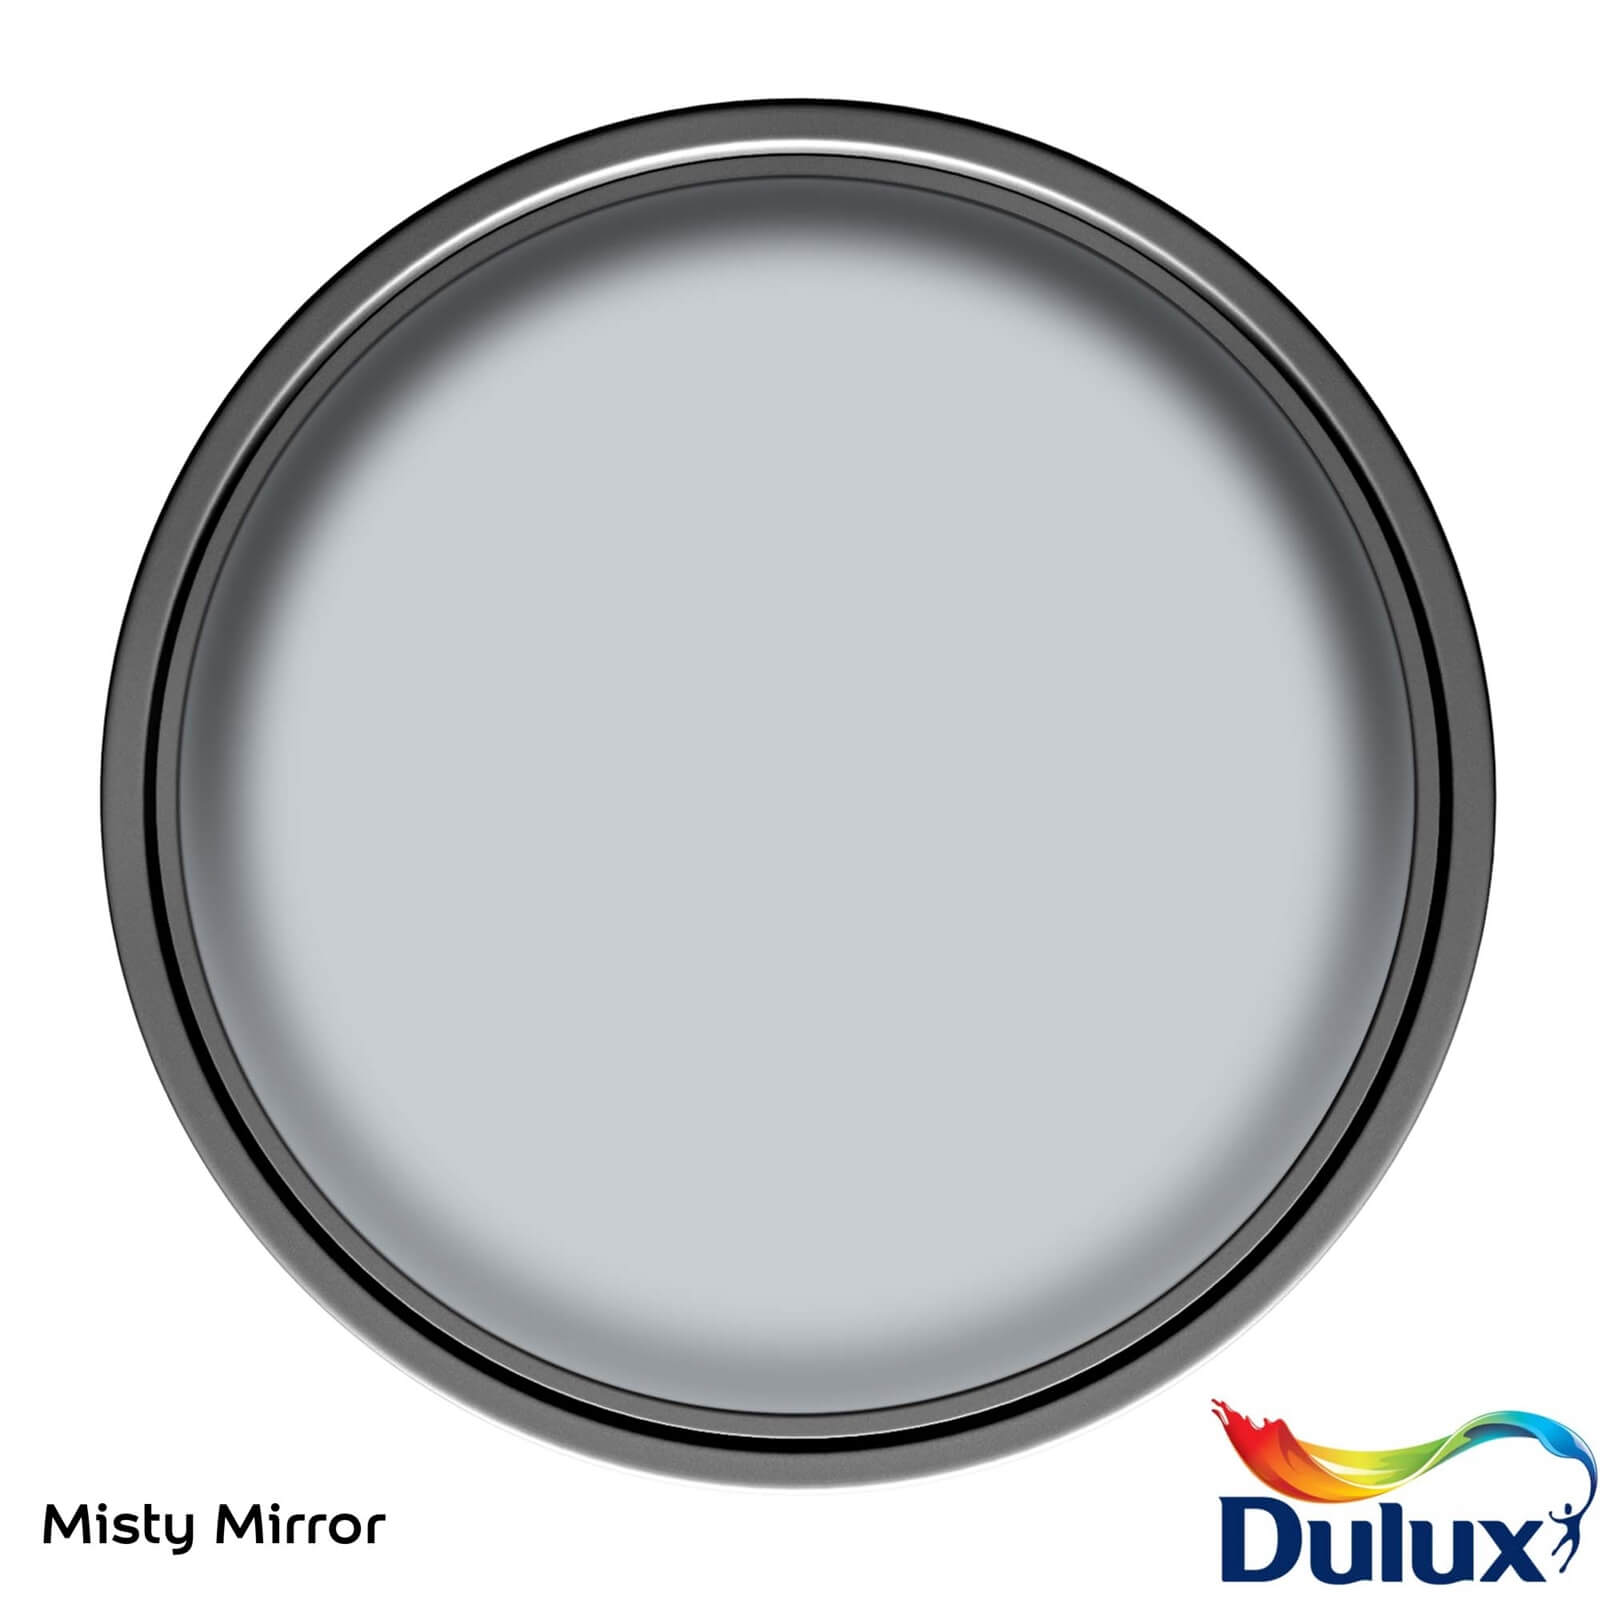 Dulux Easycare Bathroom Soft Sheen Emulsion Paint Misty Mirror - 2.5L